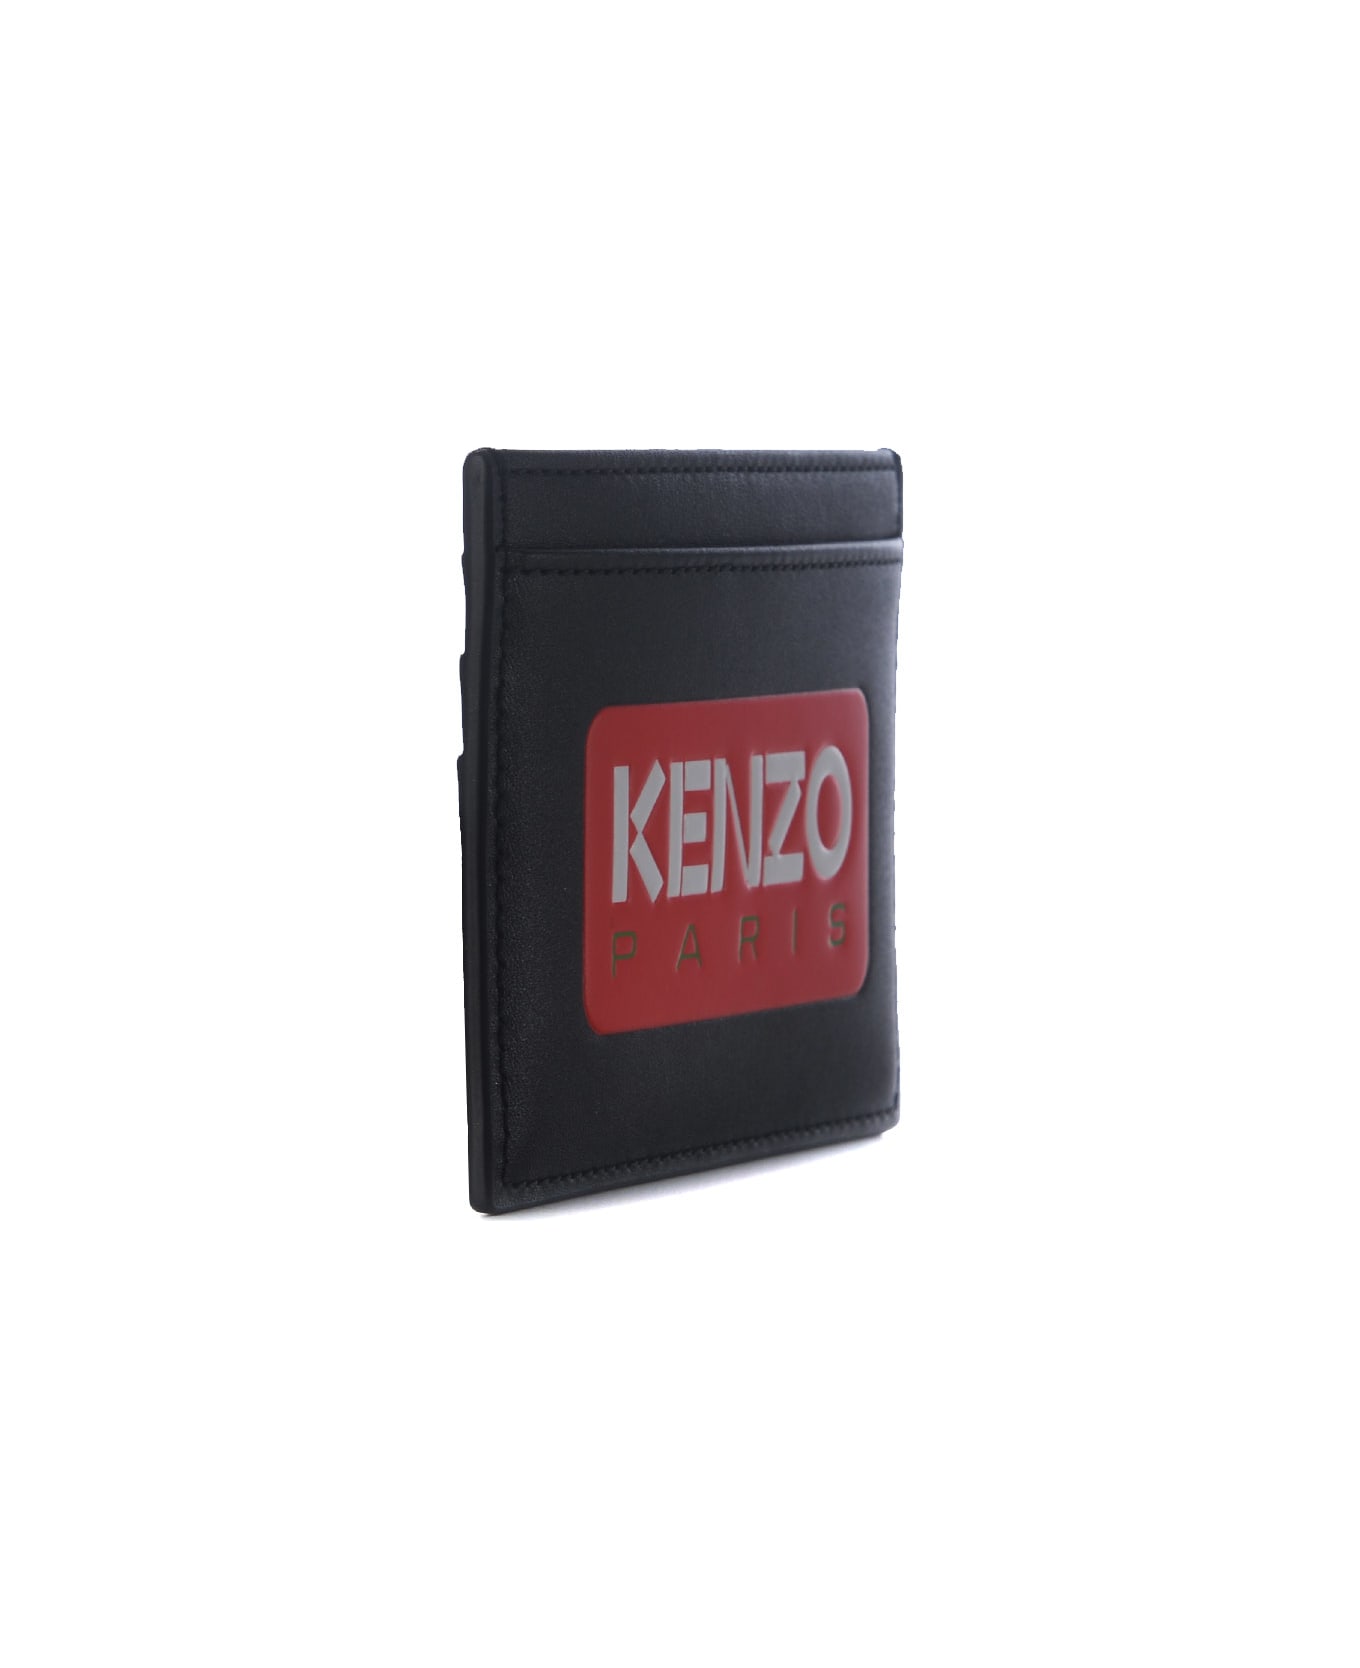 Kenzo Card Holder Kenzo "kenzo Paris" In Leather - Nero トラベルバッグ